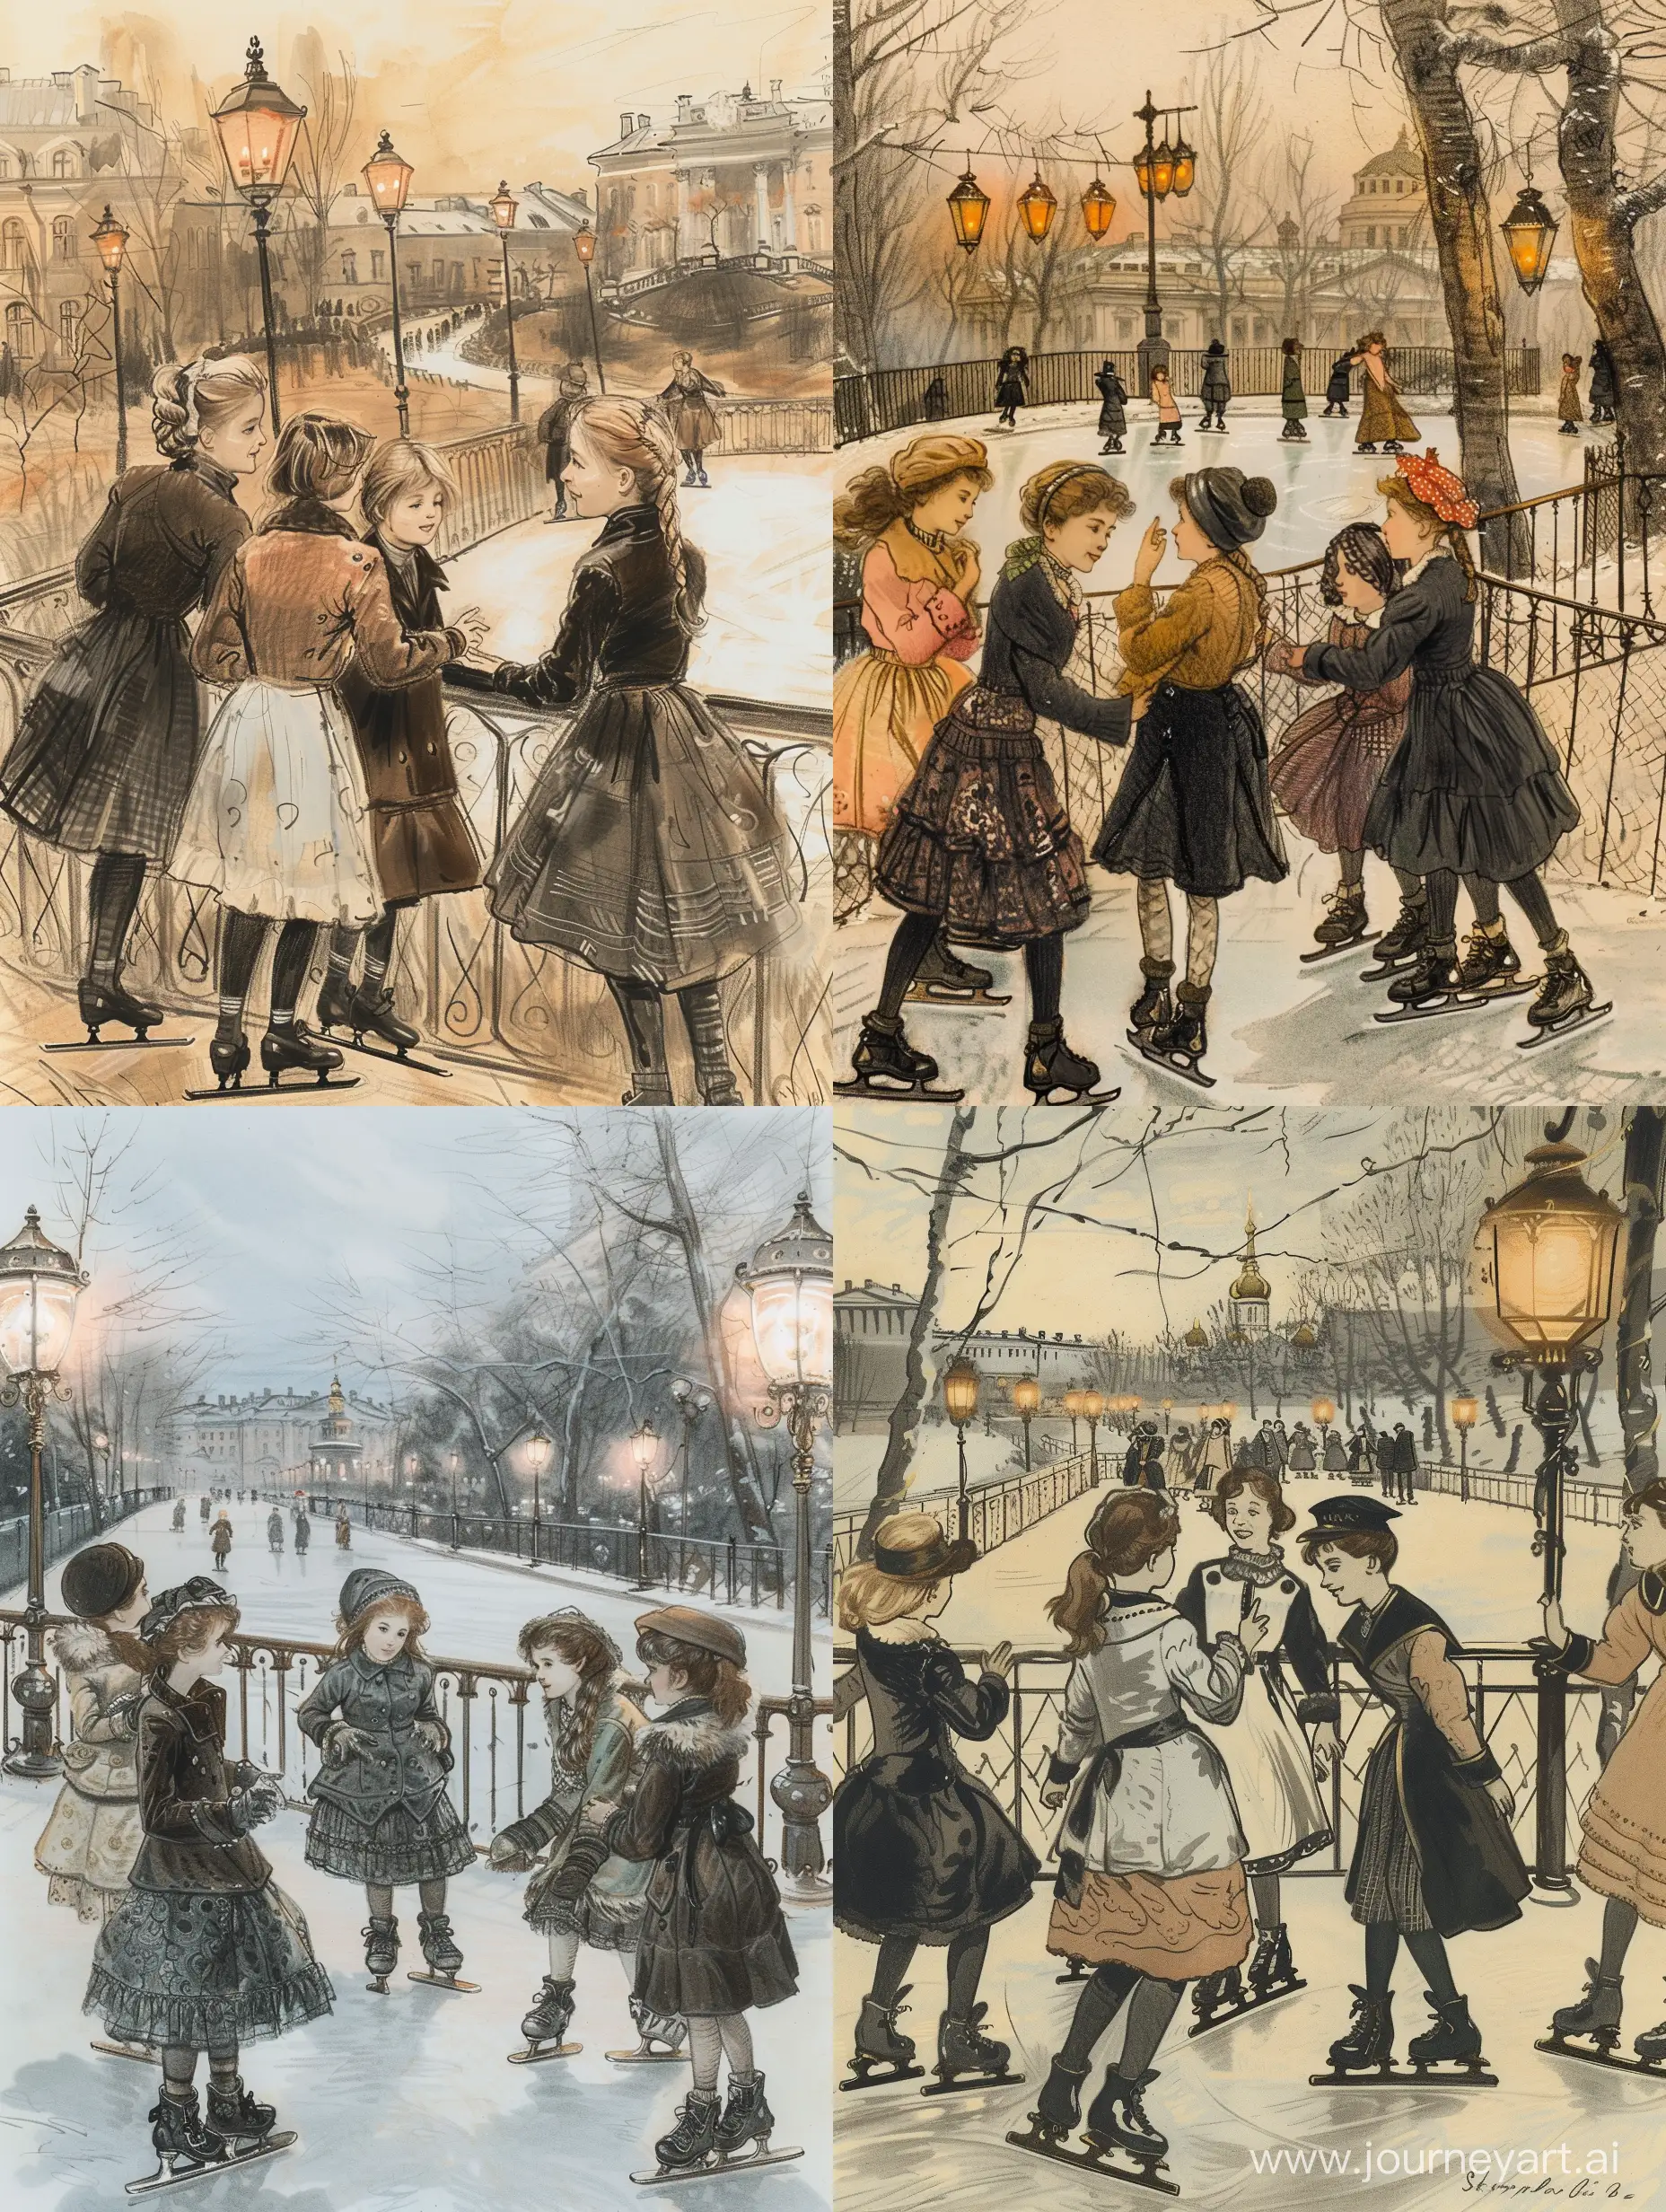 Stylish-St-Petersburg-Girls-Skating-in-19th-Century-Park-Setting